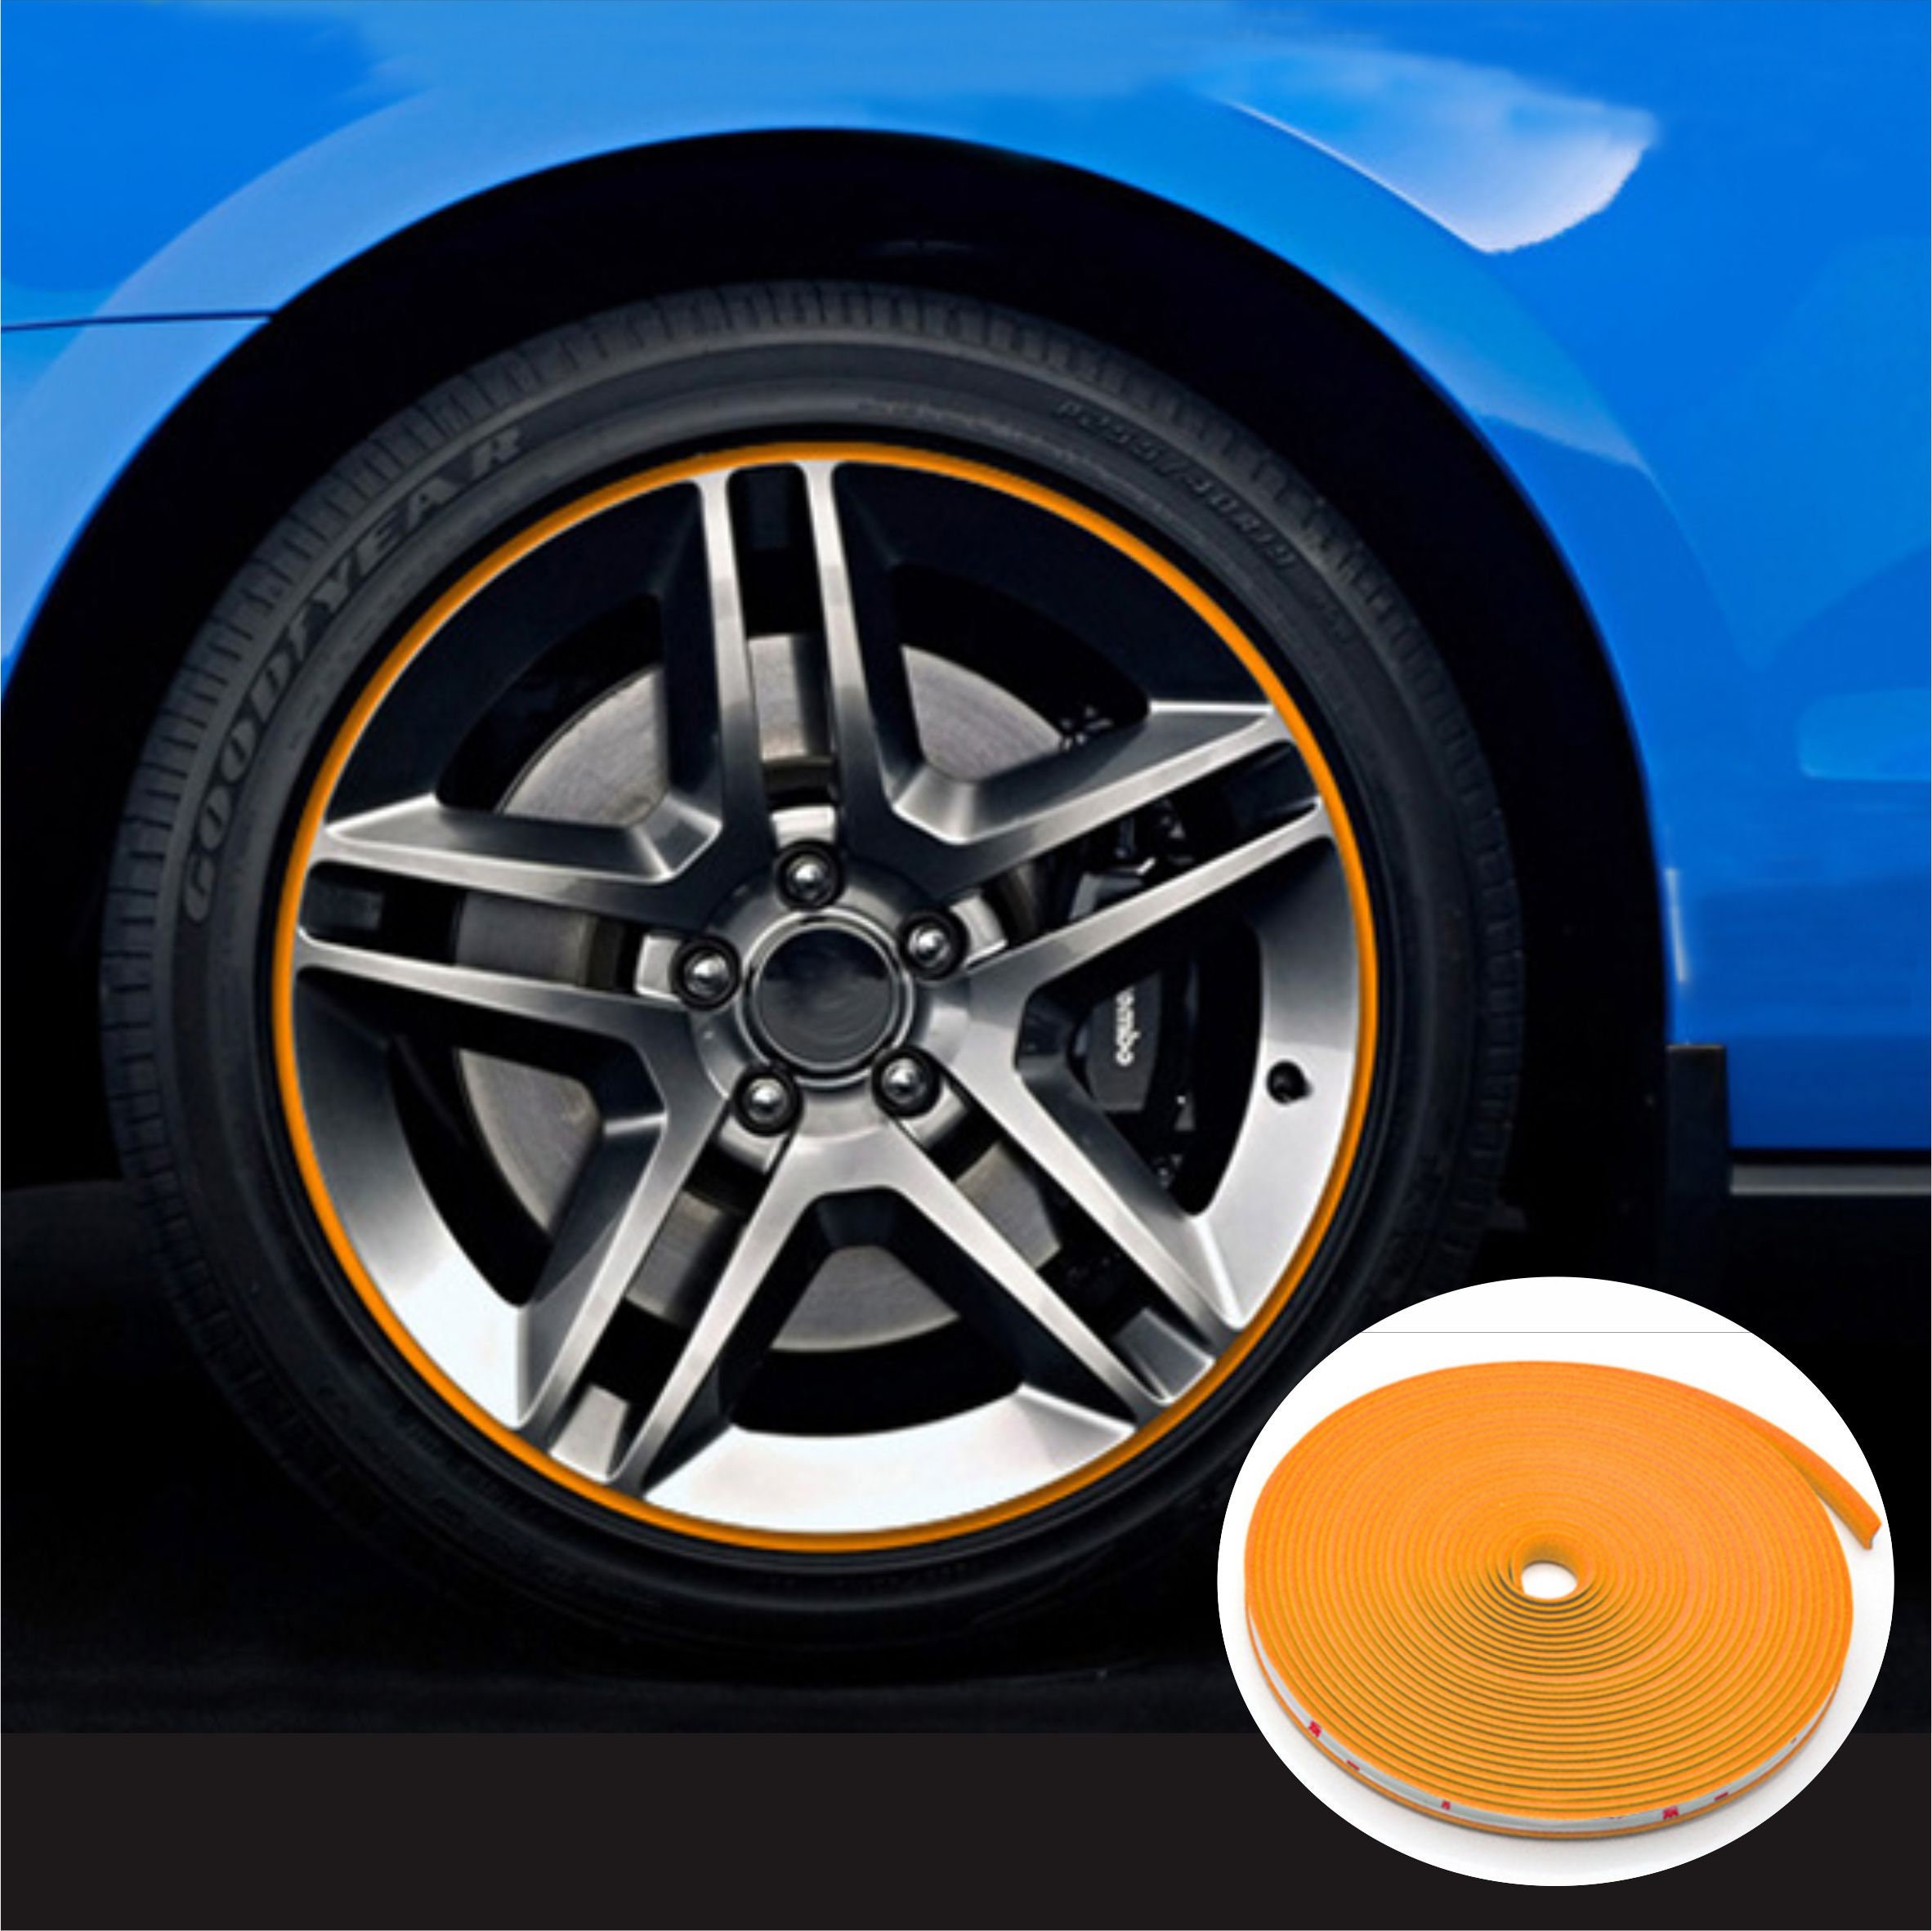 26FT Car Wheel Hub 8M Car Wheel Protector Hub Sticker Car Decorative Strip Auto Rim/Tire Protection Care Covers Rubber Moulding Trim Green 